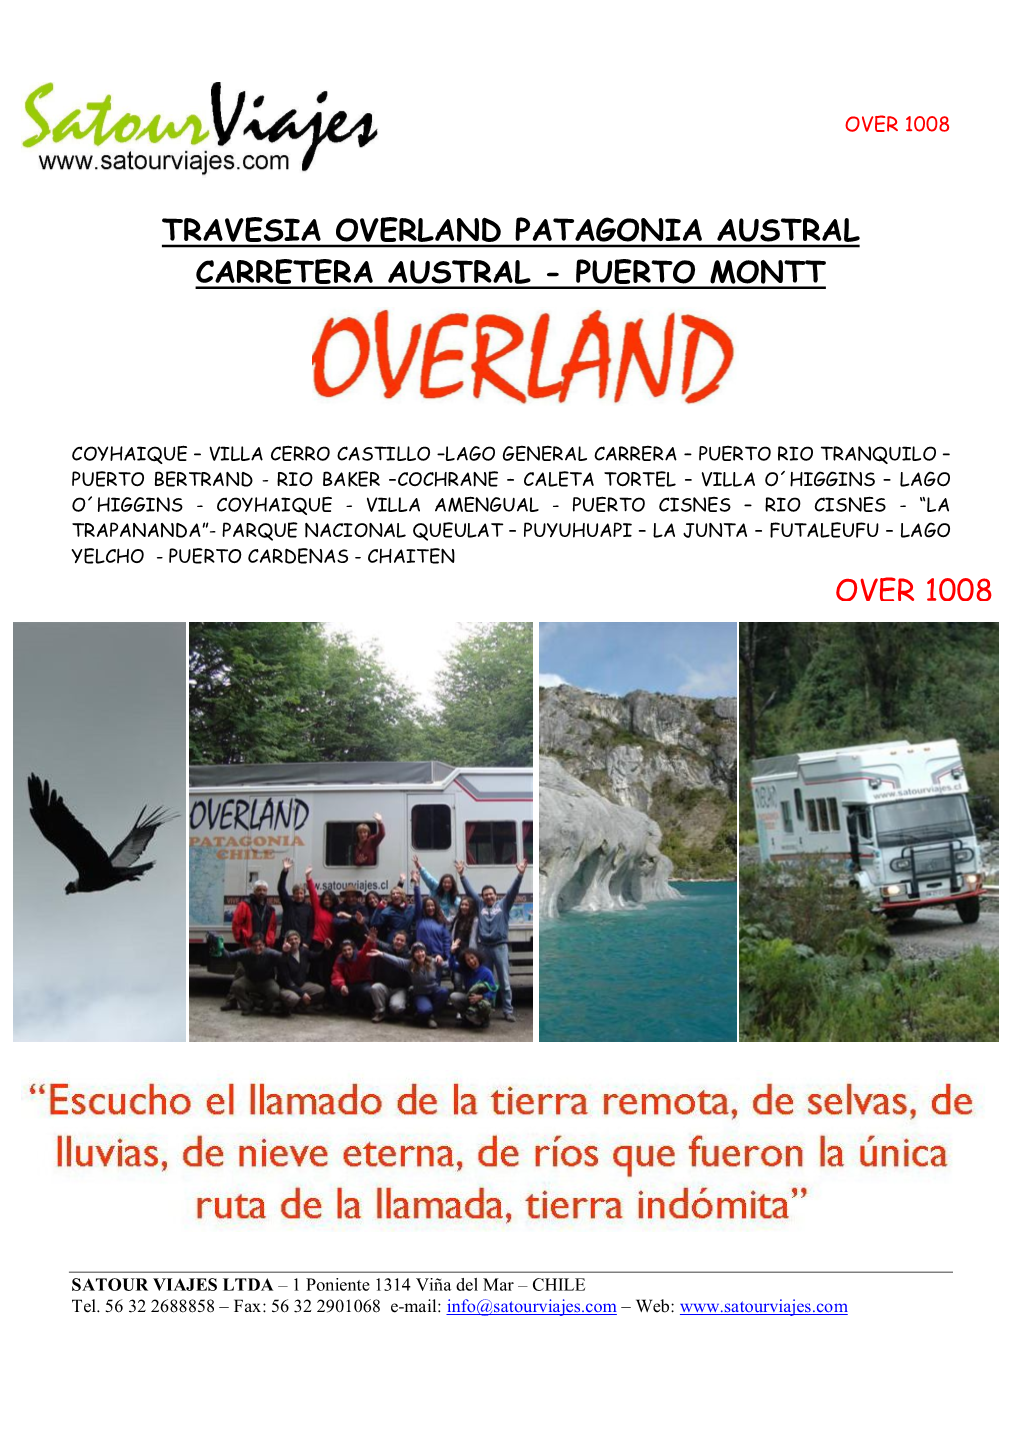 Travesia Overland Patagonia Austral Carretera Austral - Puerto Montt